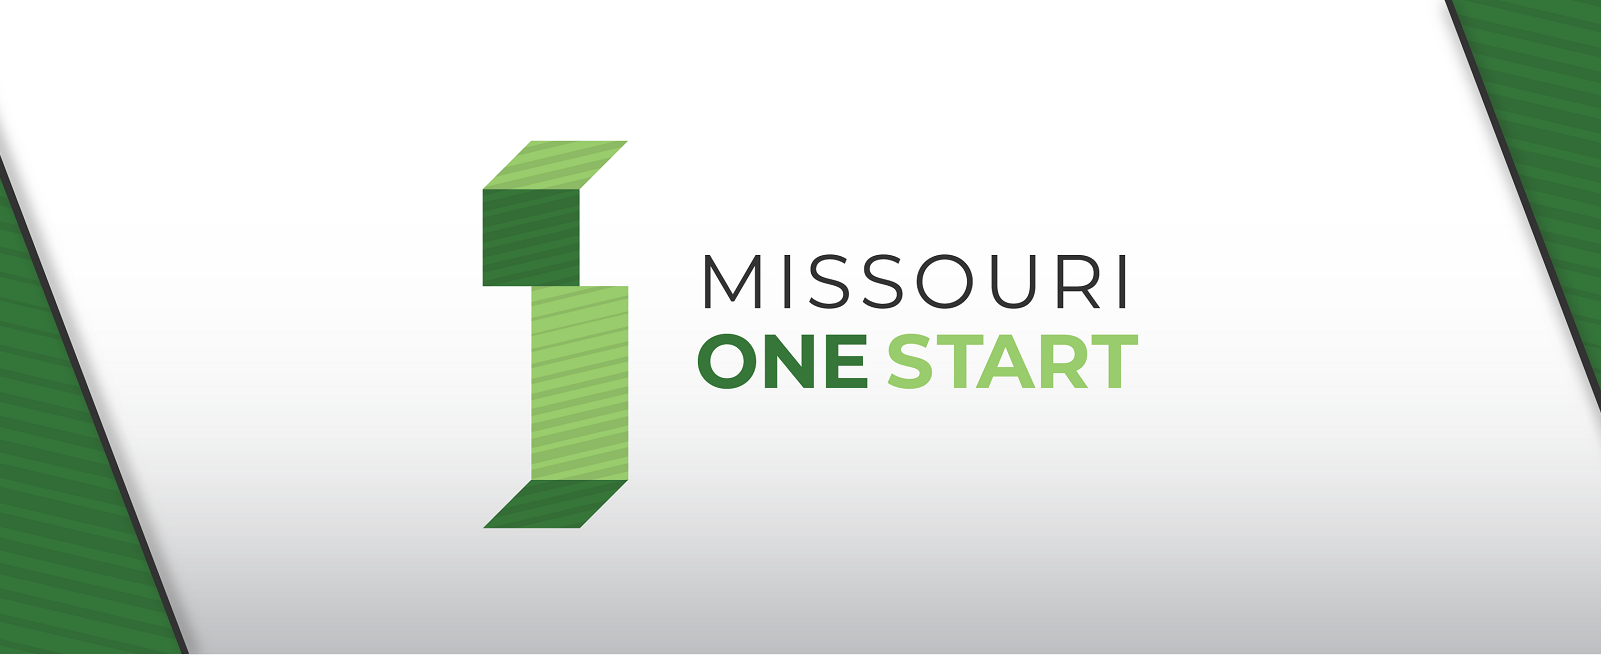 Missouri One Start